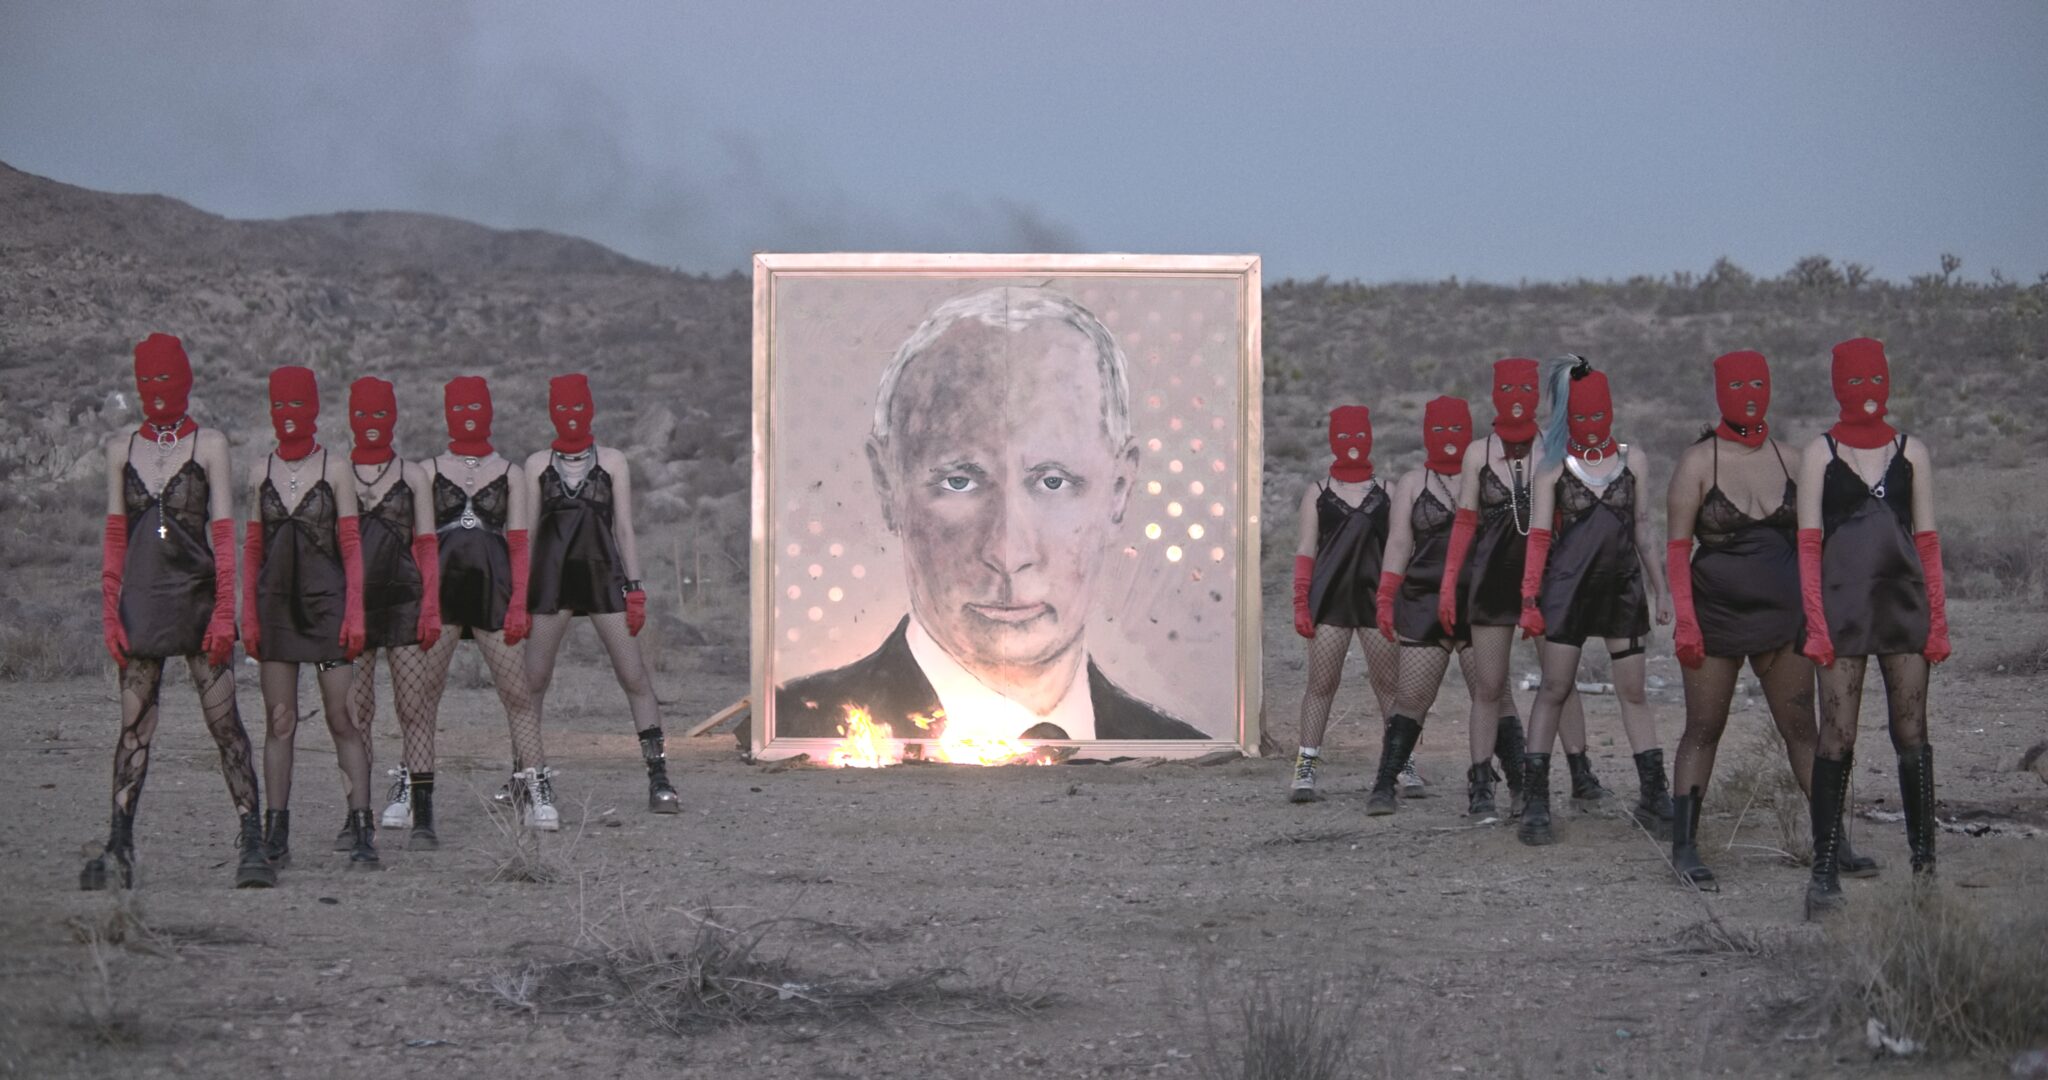 Pussy Riot brings Putin its radical performance art to Jeffrey Deitch's Los Angeles